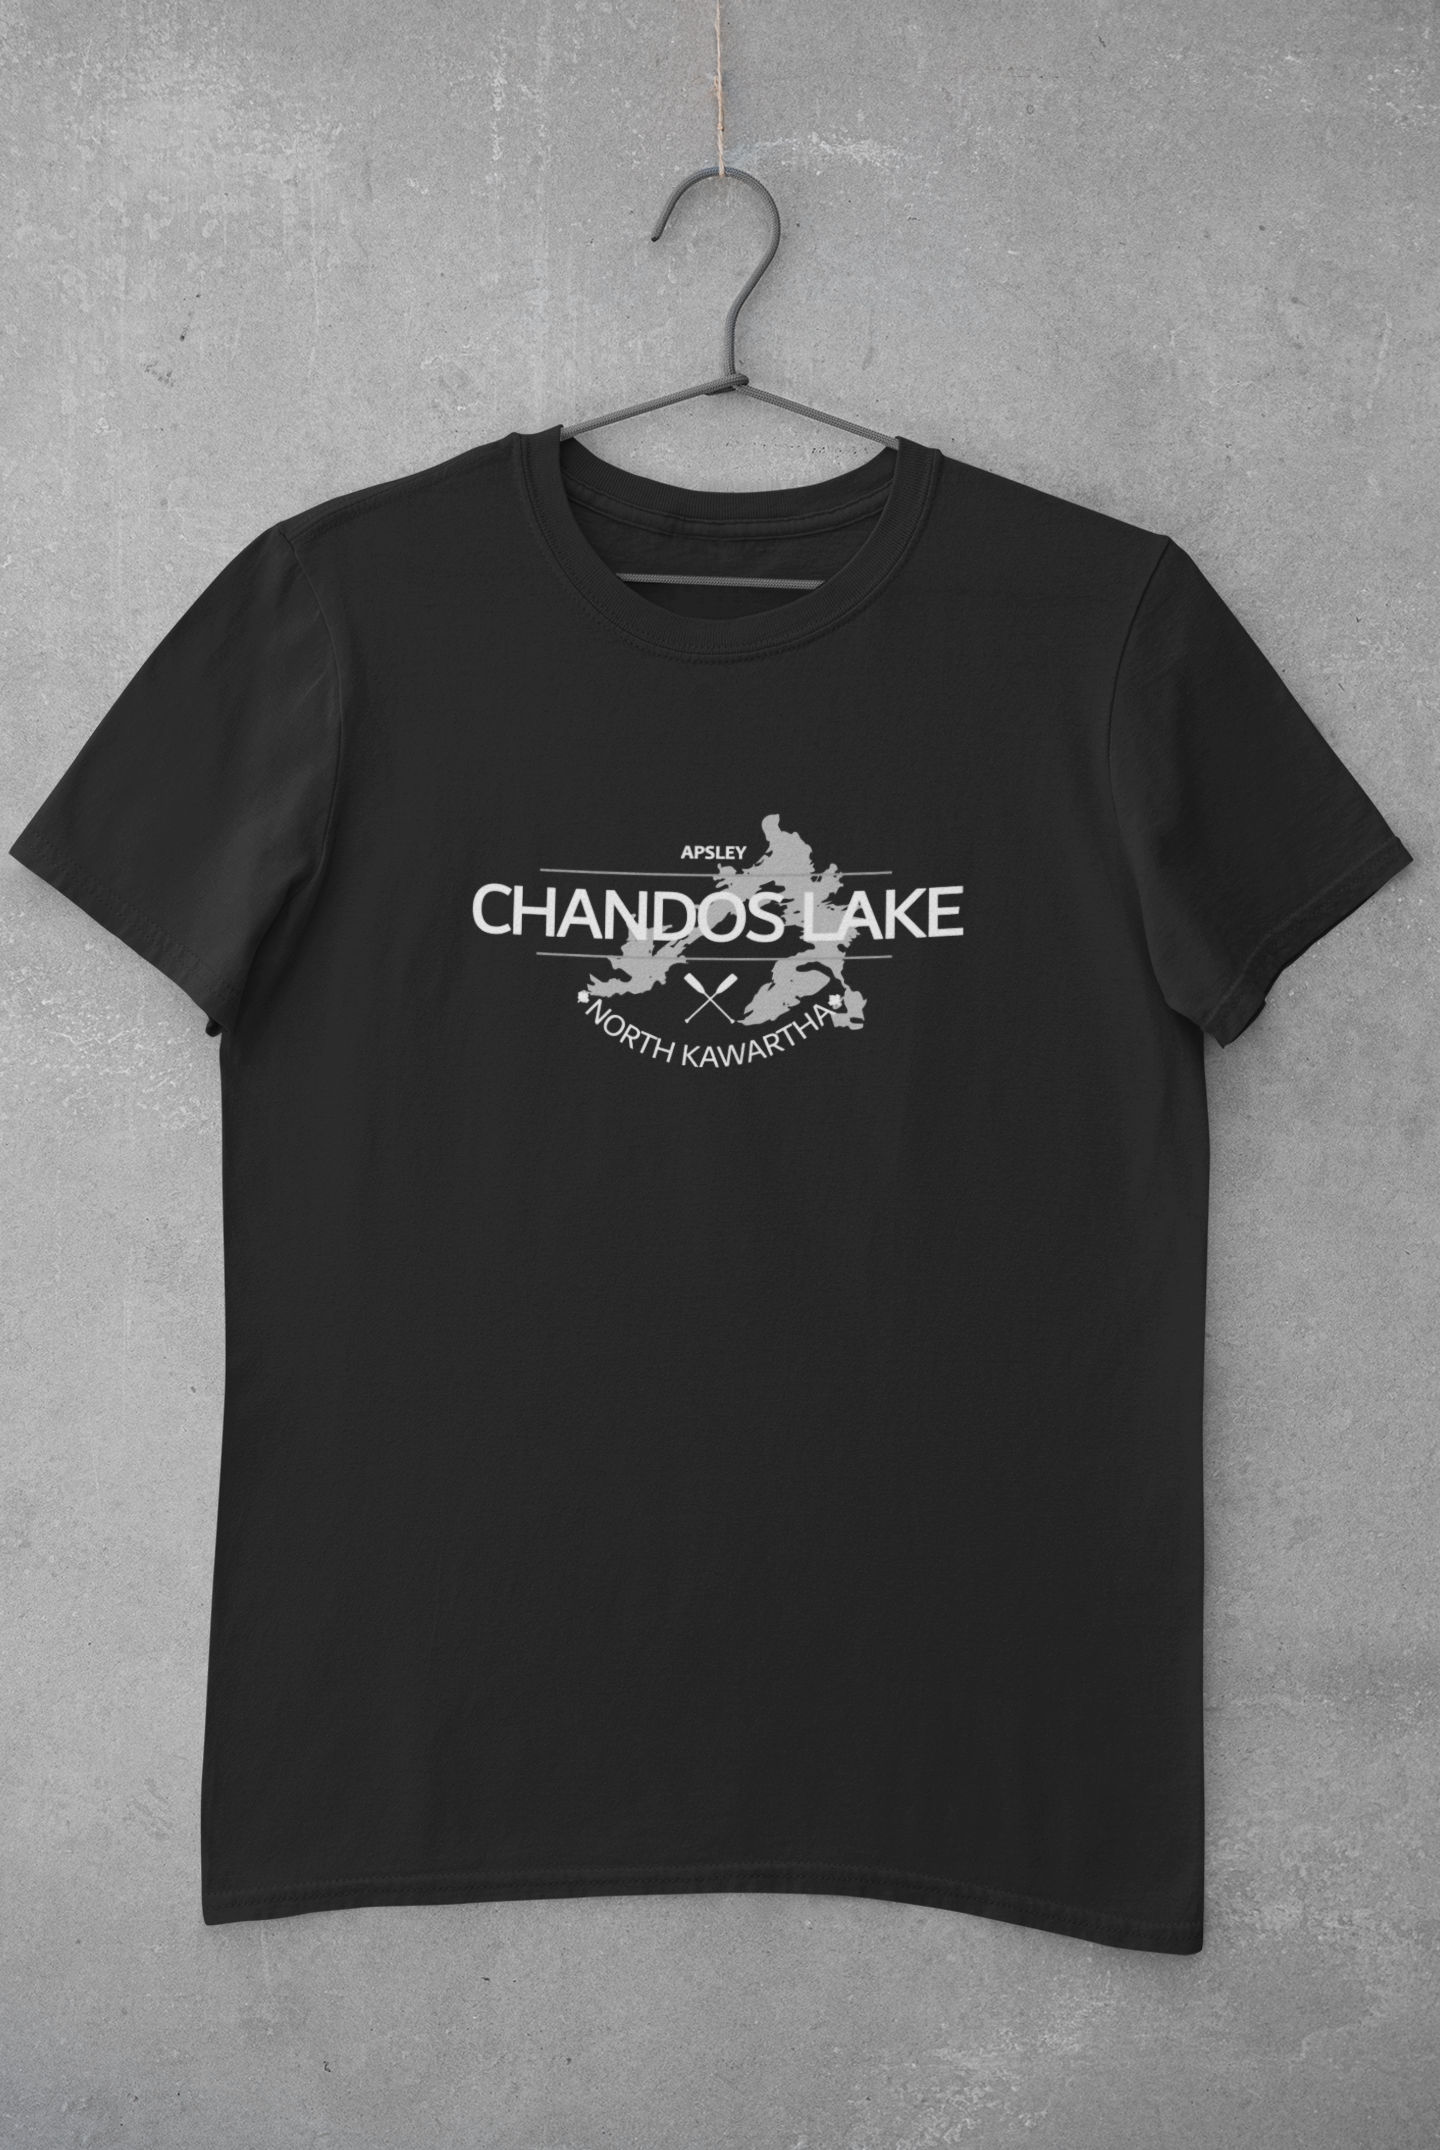 Chandos Lake Adult T-Shirt (Men's)